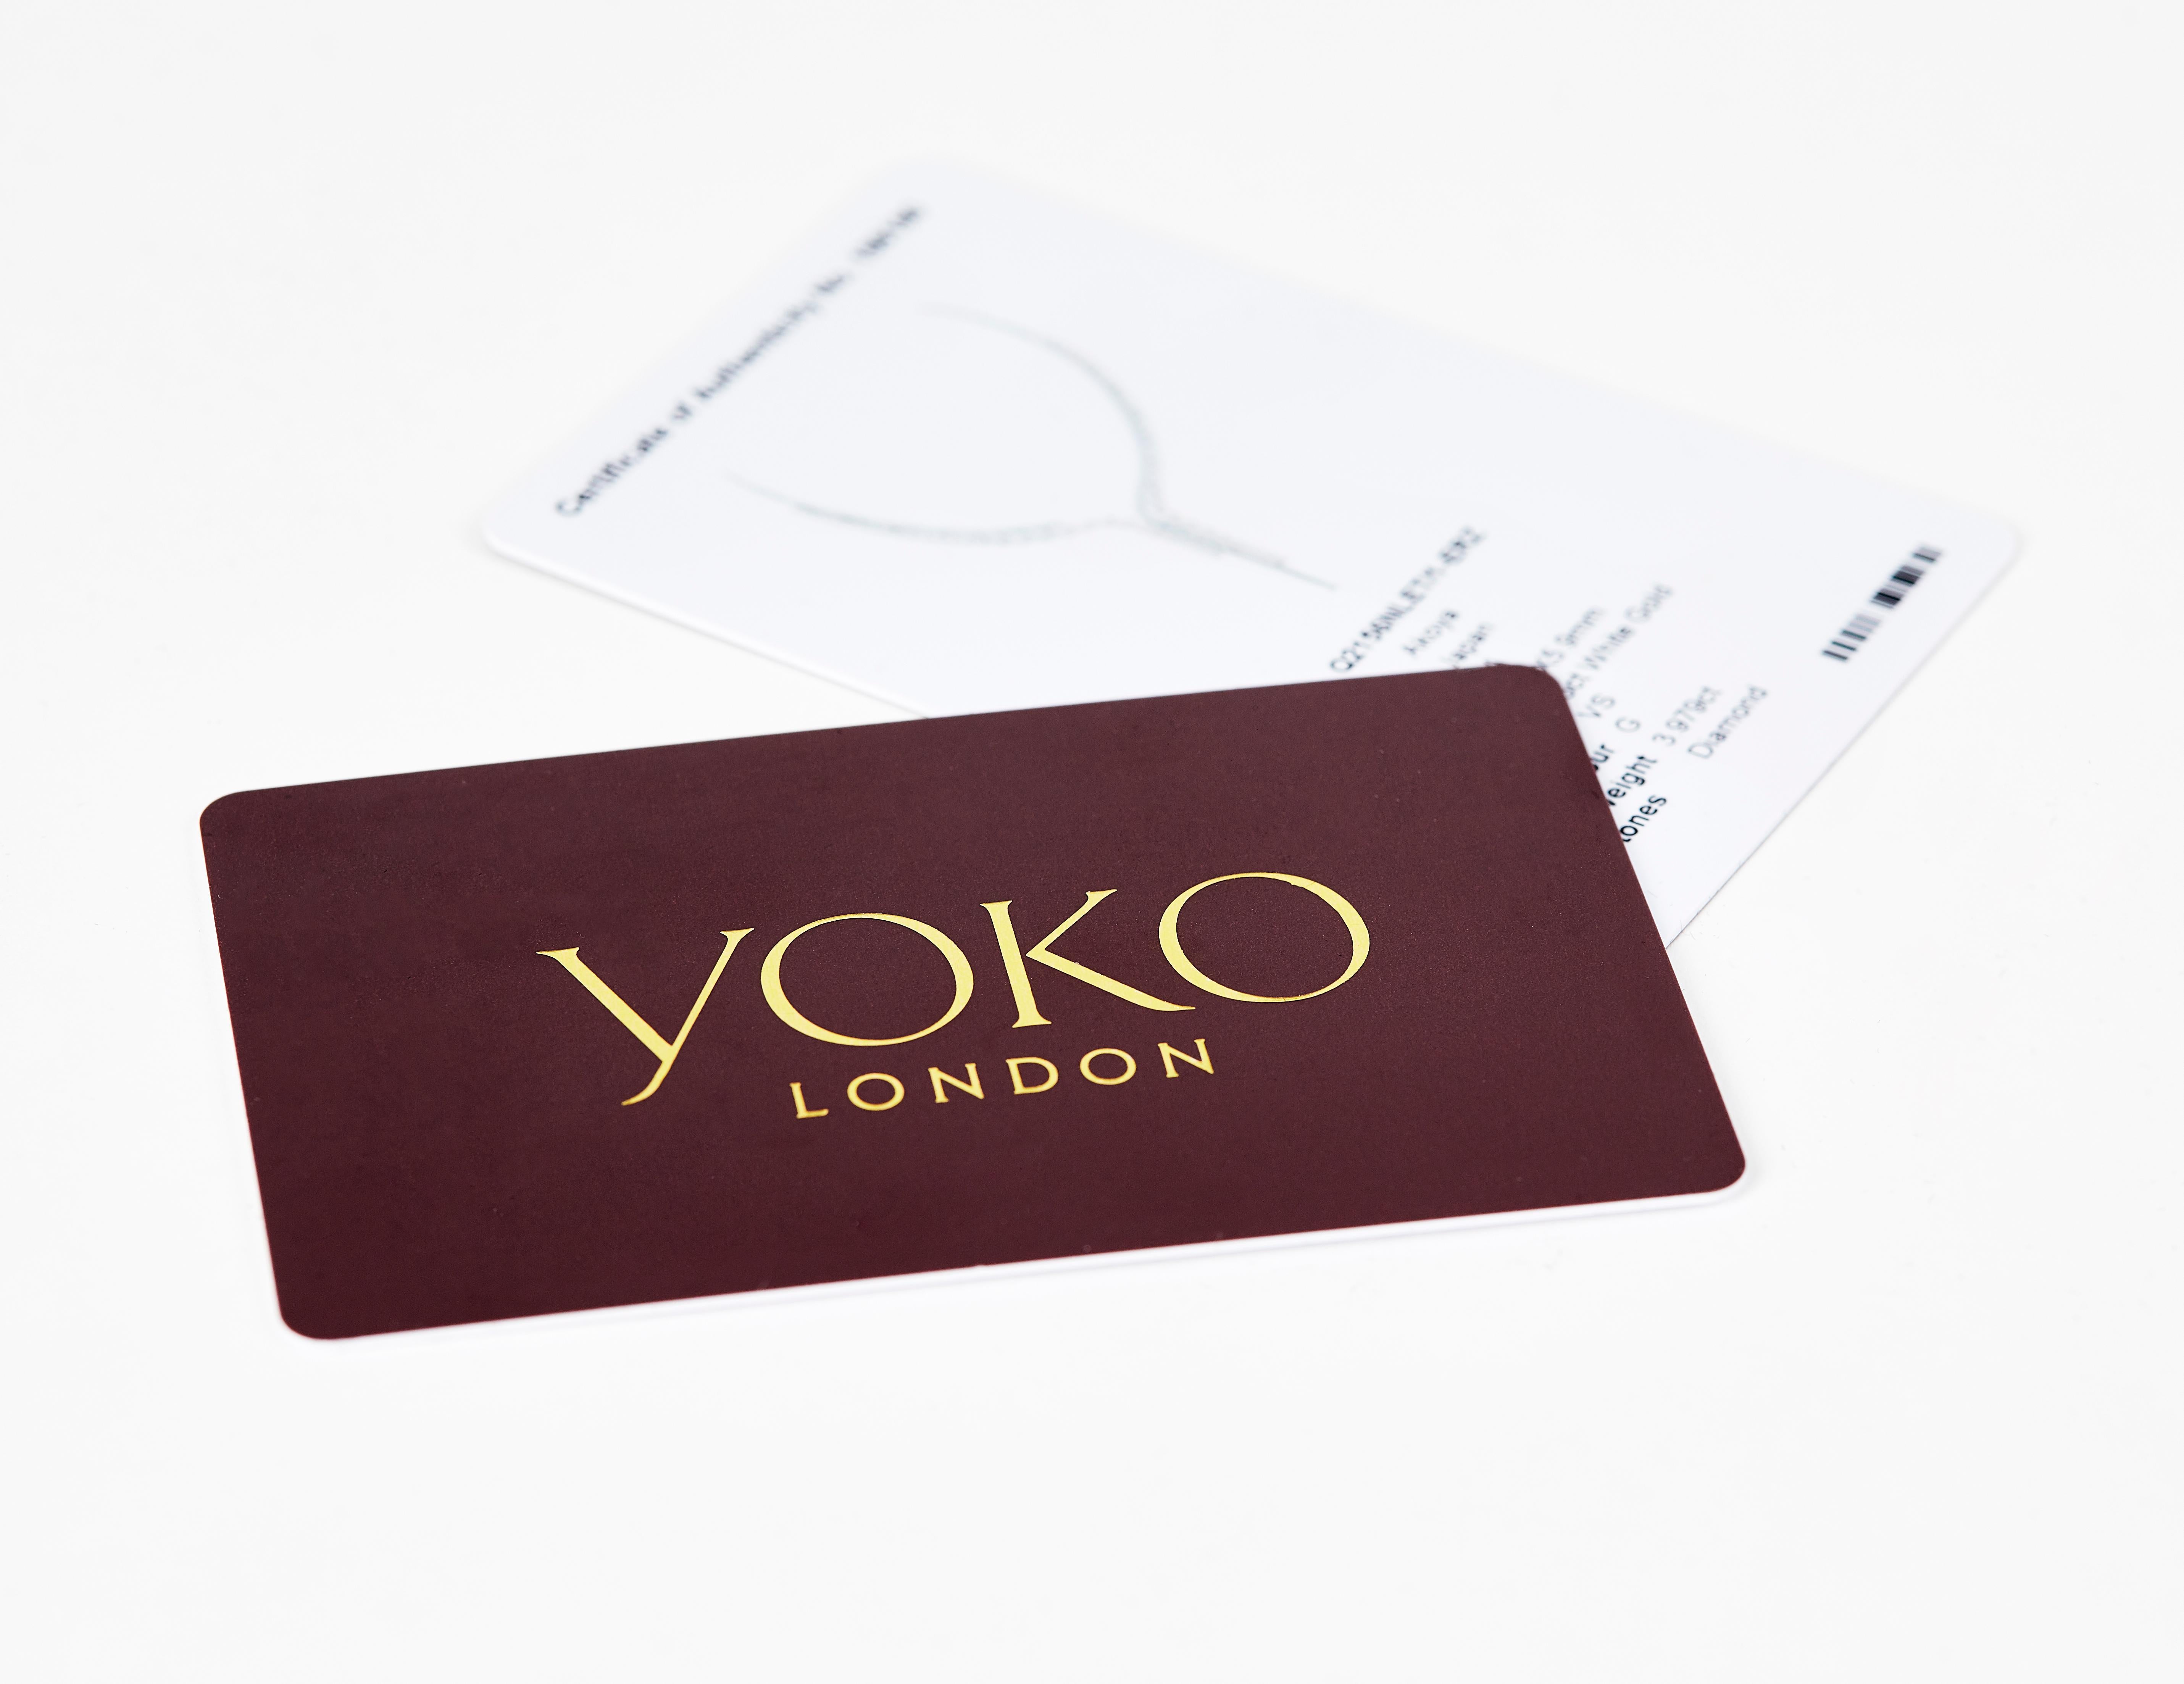 Yoko London Akoya Pearl and Diamond Choker Necklace in 18K White Gold 2